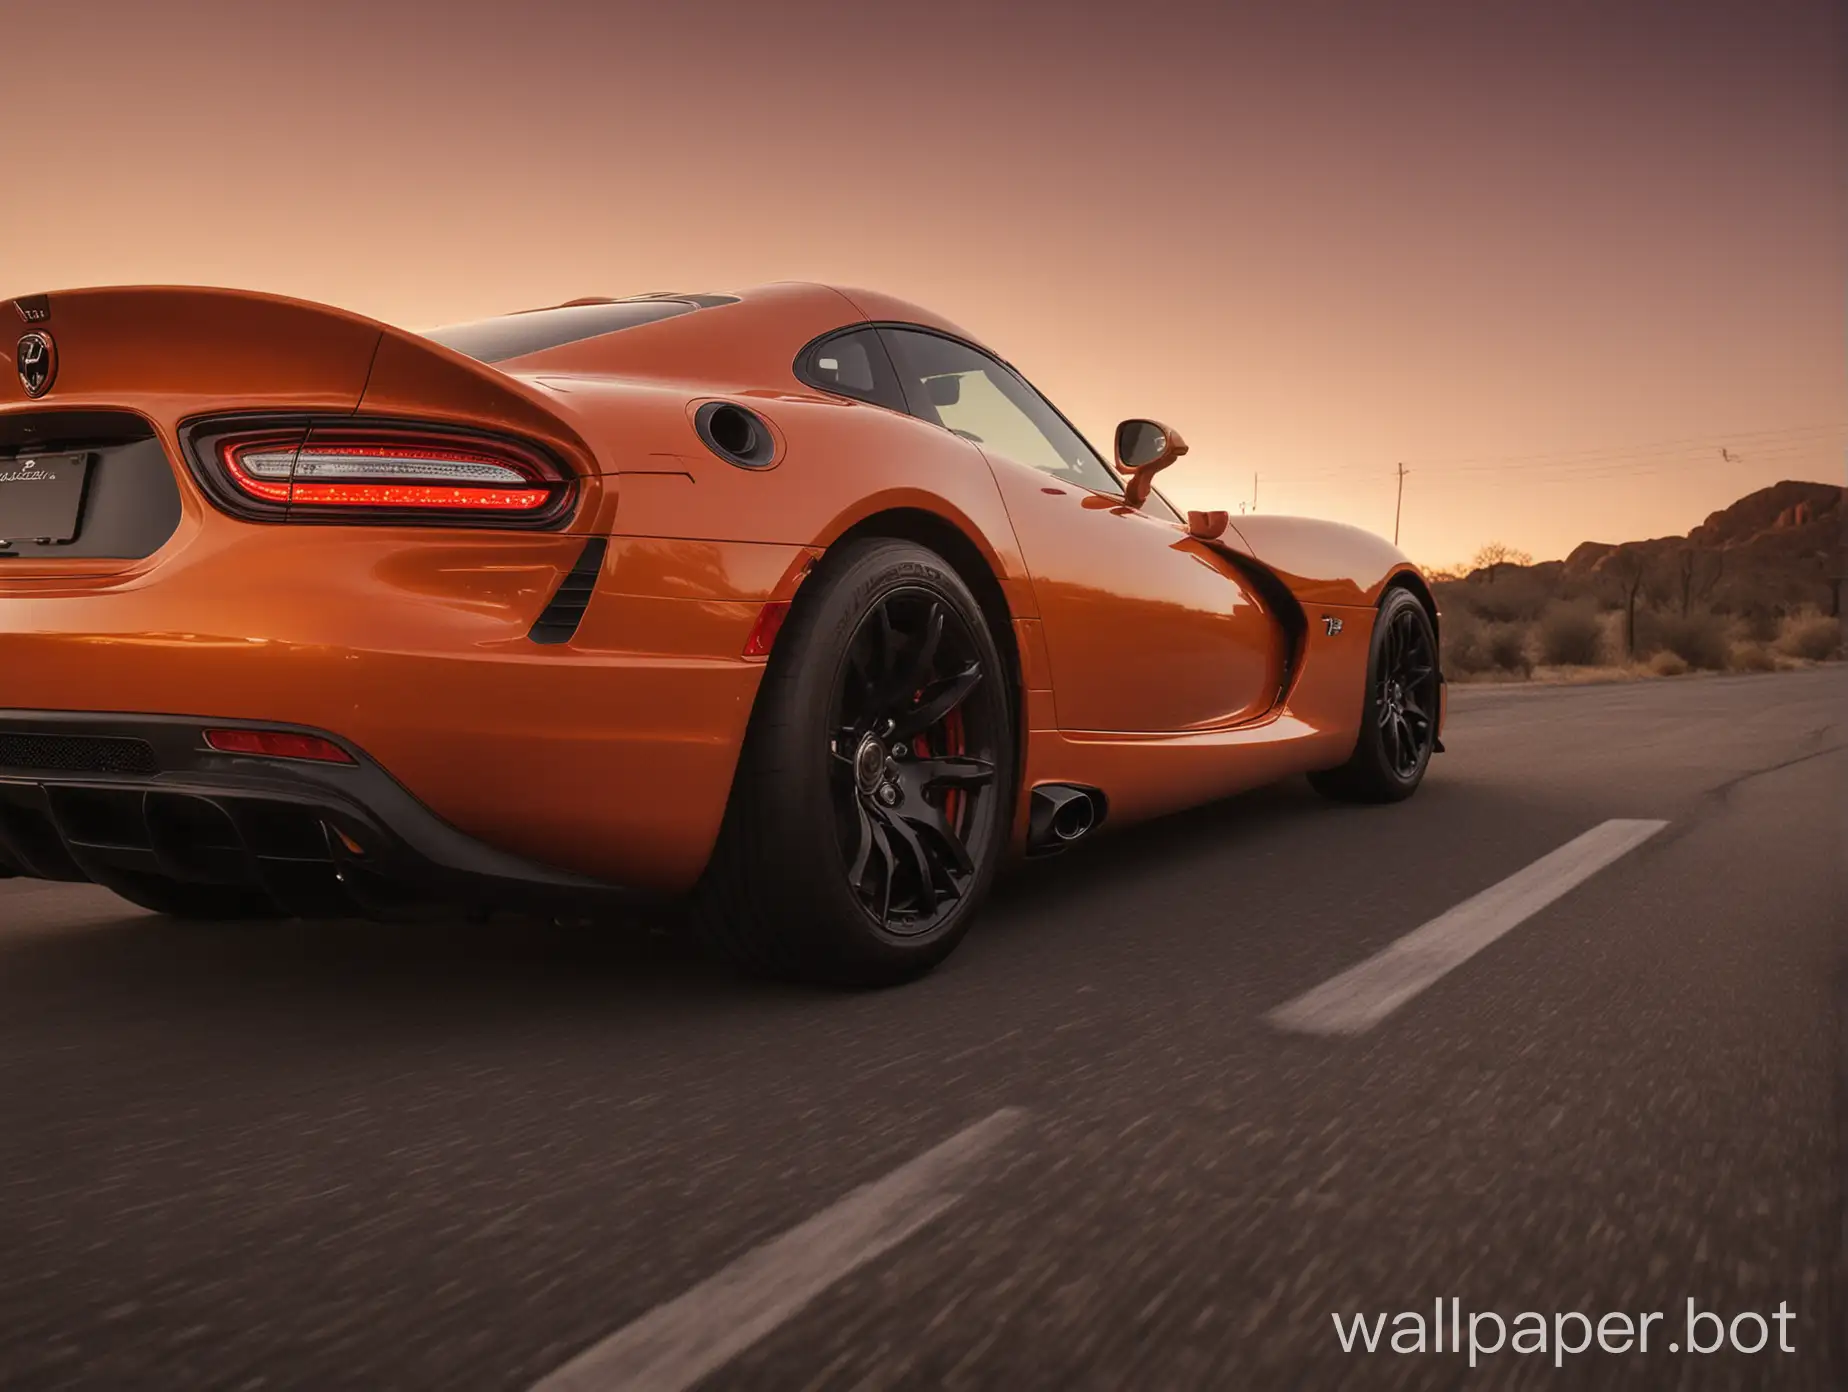 2014 srt dodge viper orange cinematic wallpaper for posternshot of exhaust and taillight ndarker shot with sunset